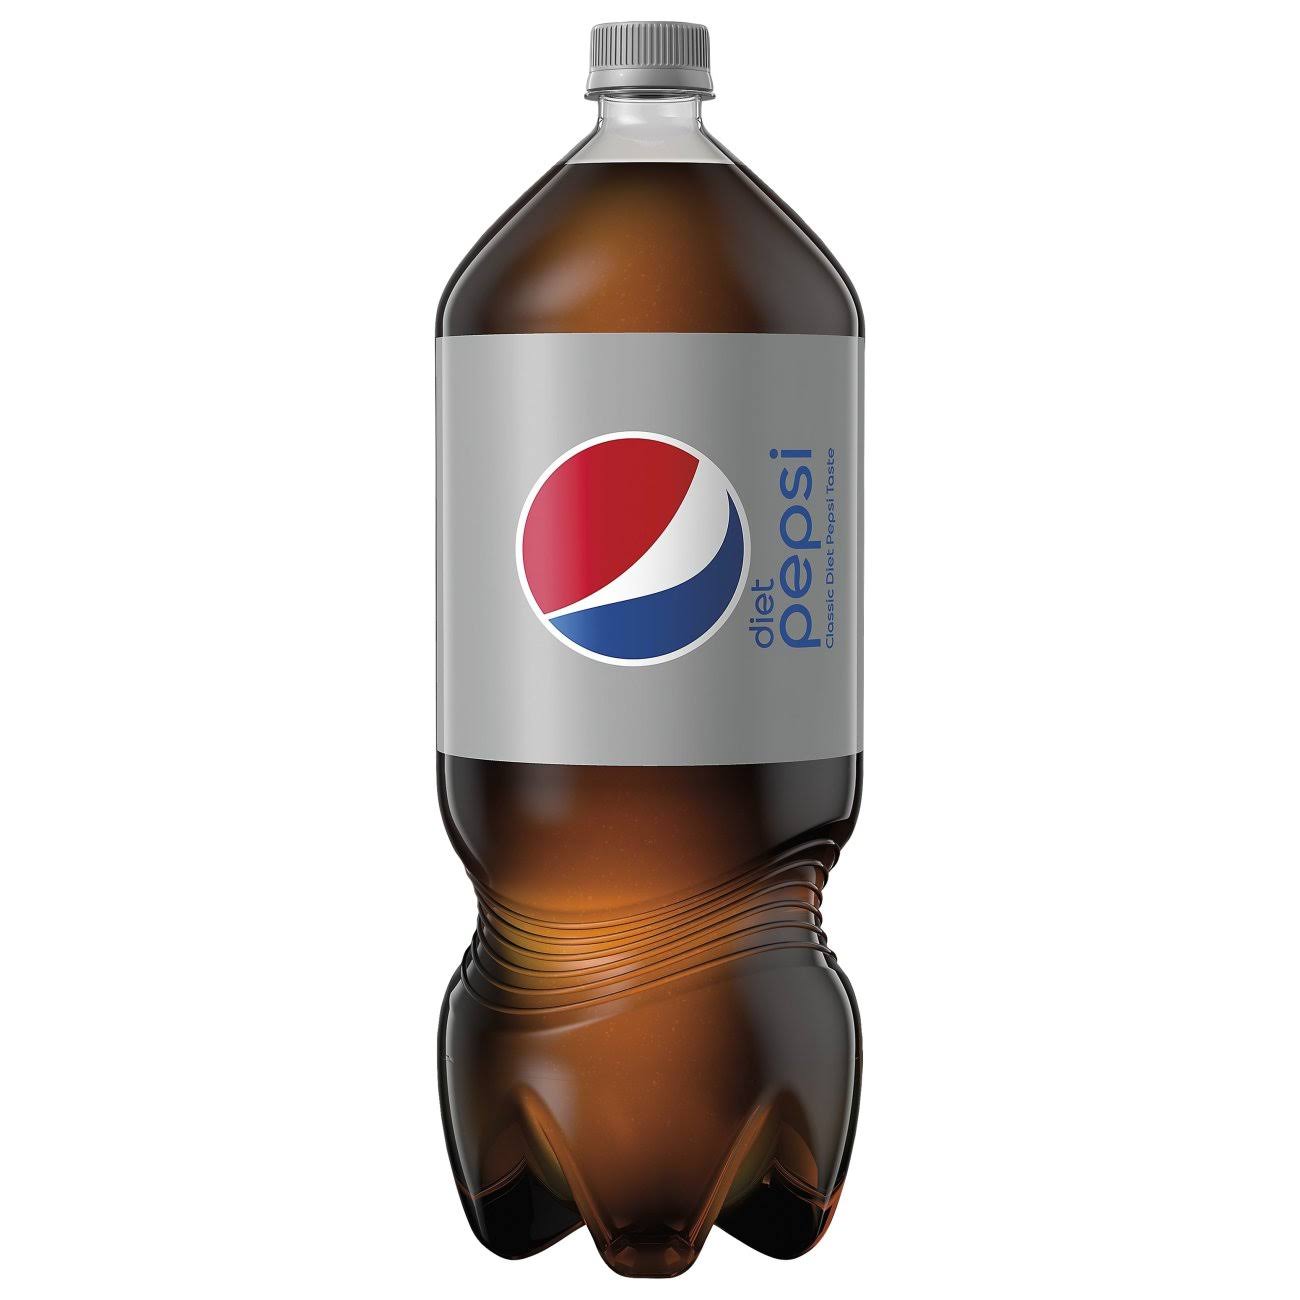 Diet Pepsi, 2 Liter Bottle